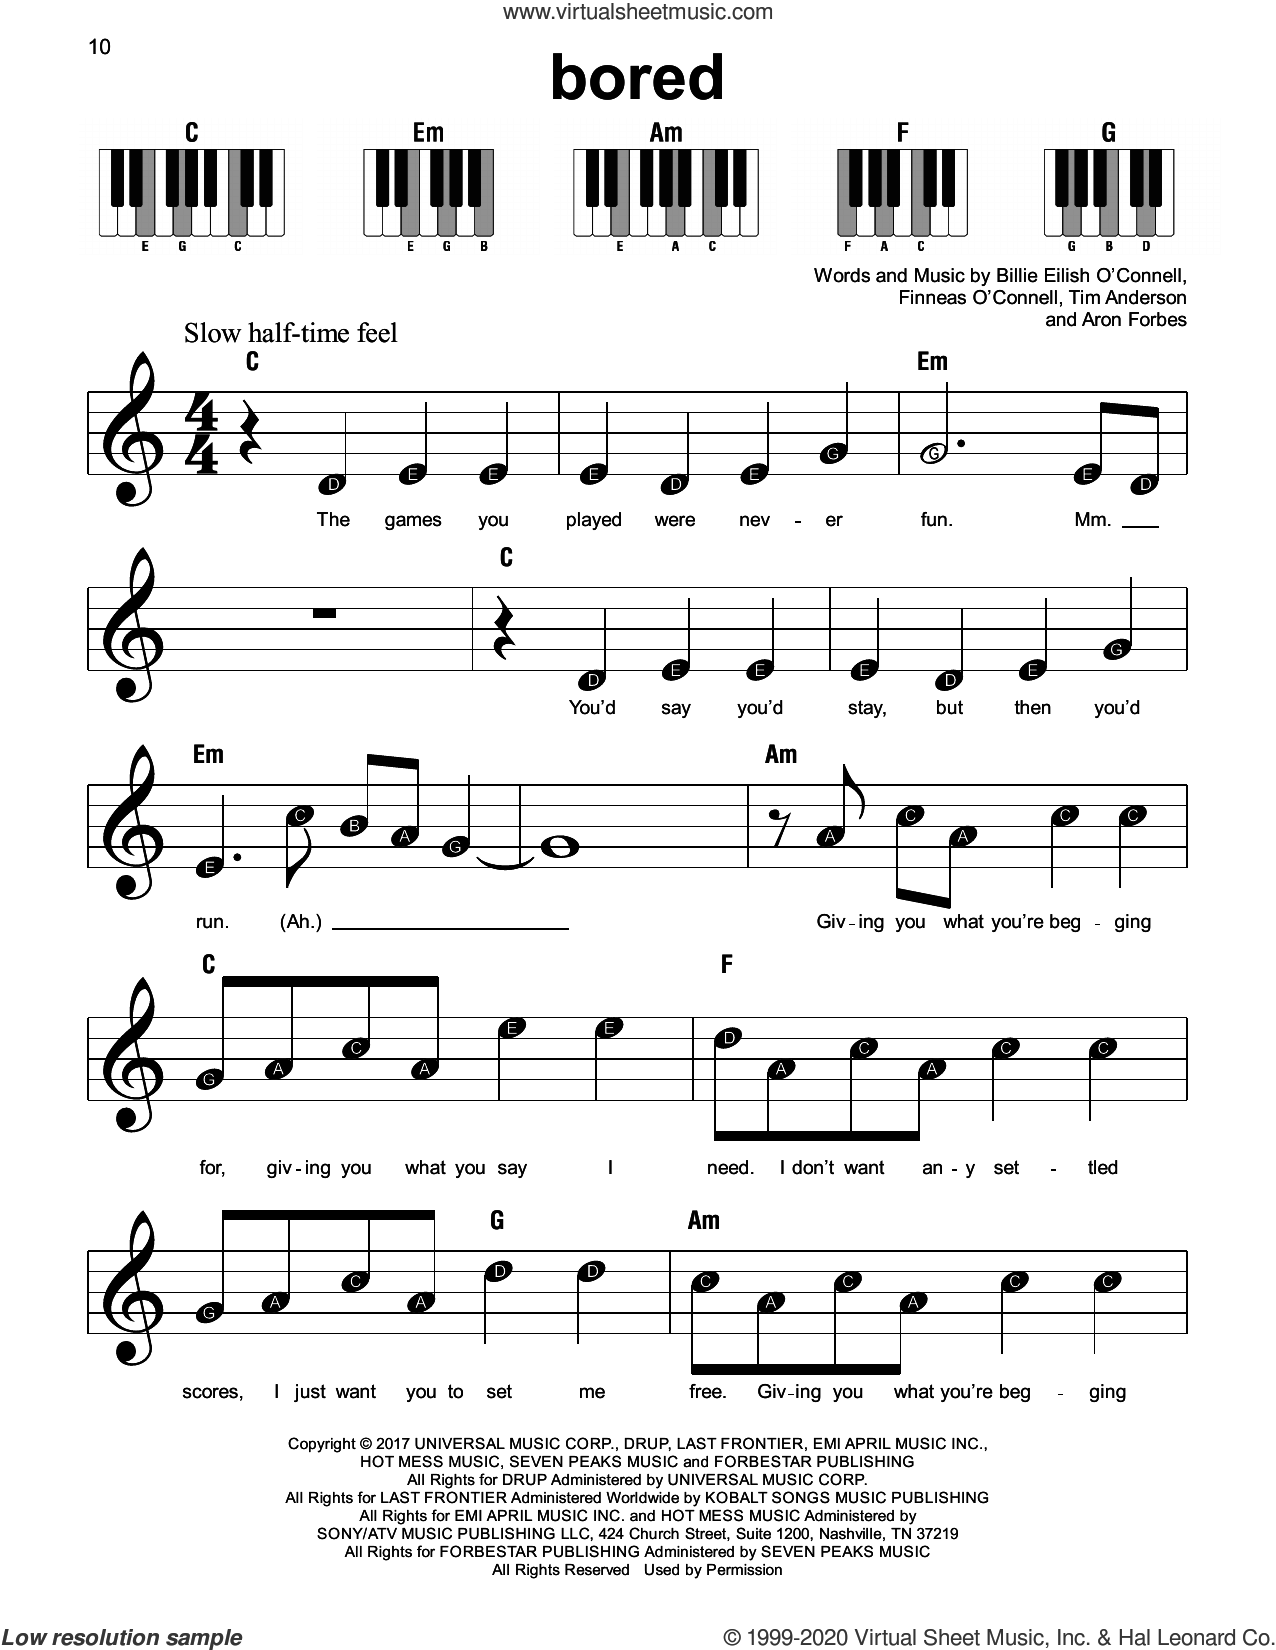 Bored sheet music for piano solo (PDF)